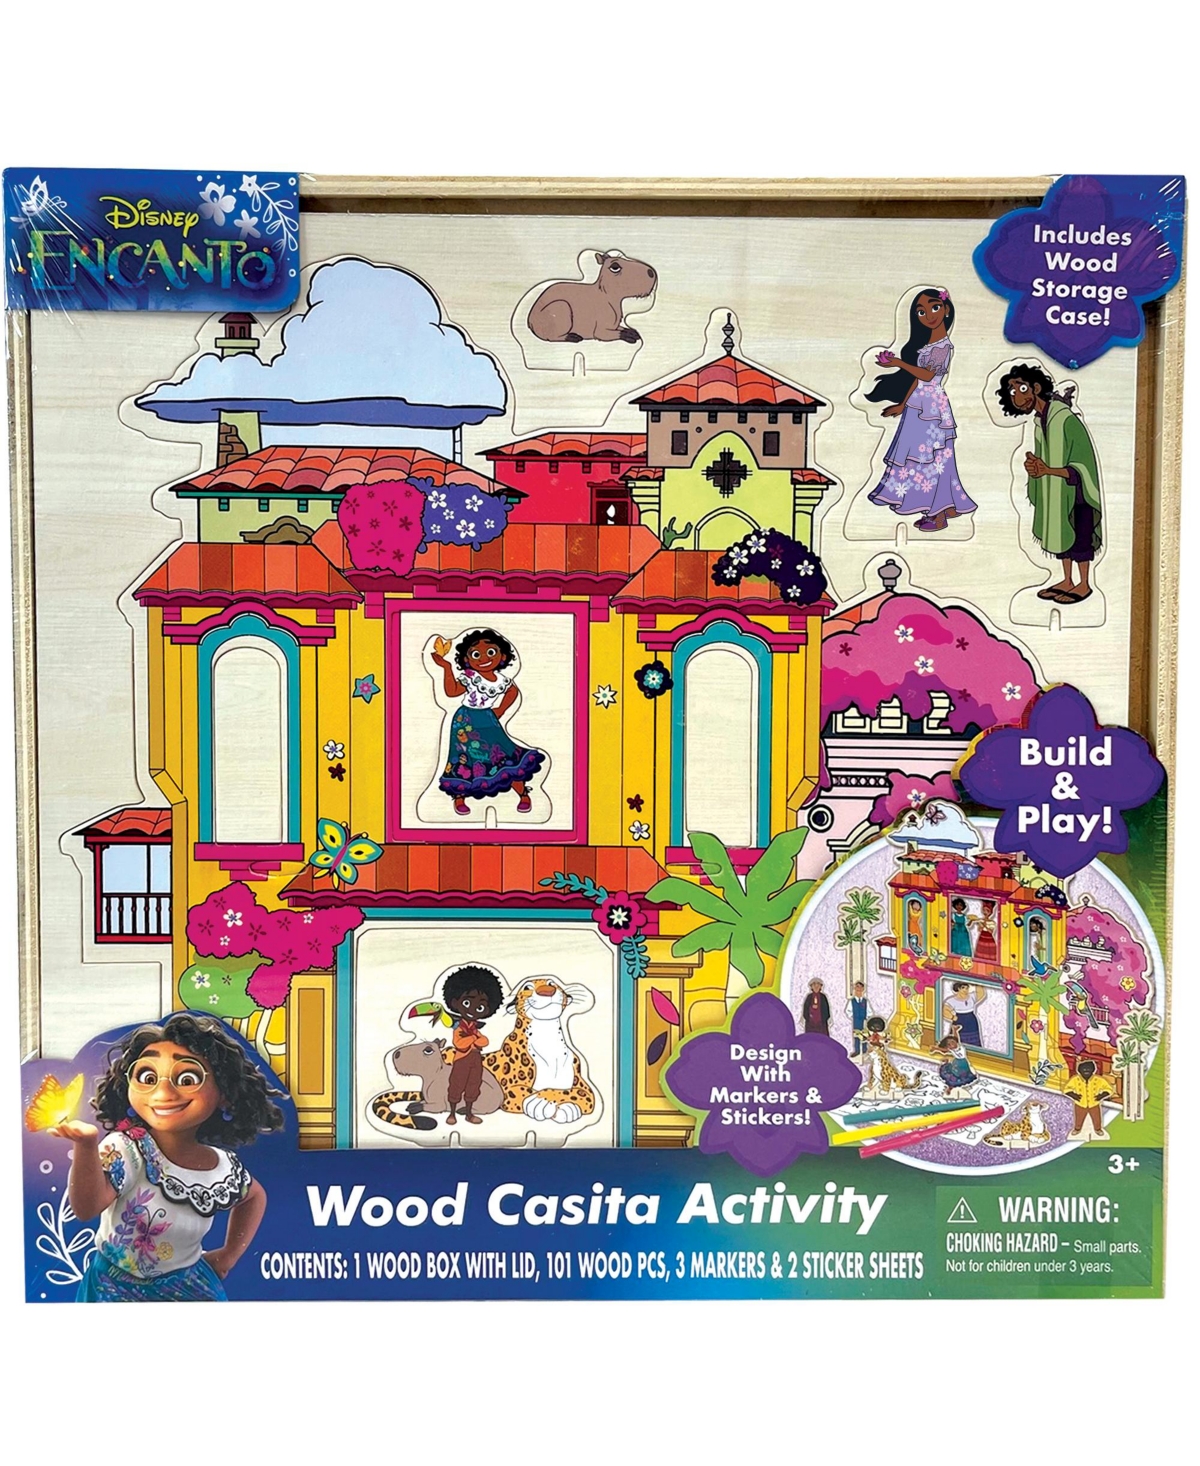 Disney's Encanto Wood Casita Activity Building Decorating Set, 11 Piece - Multi